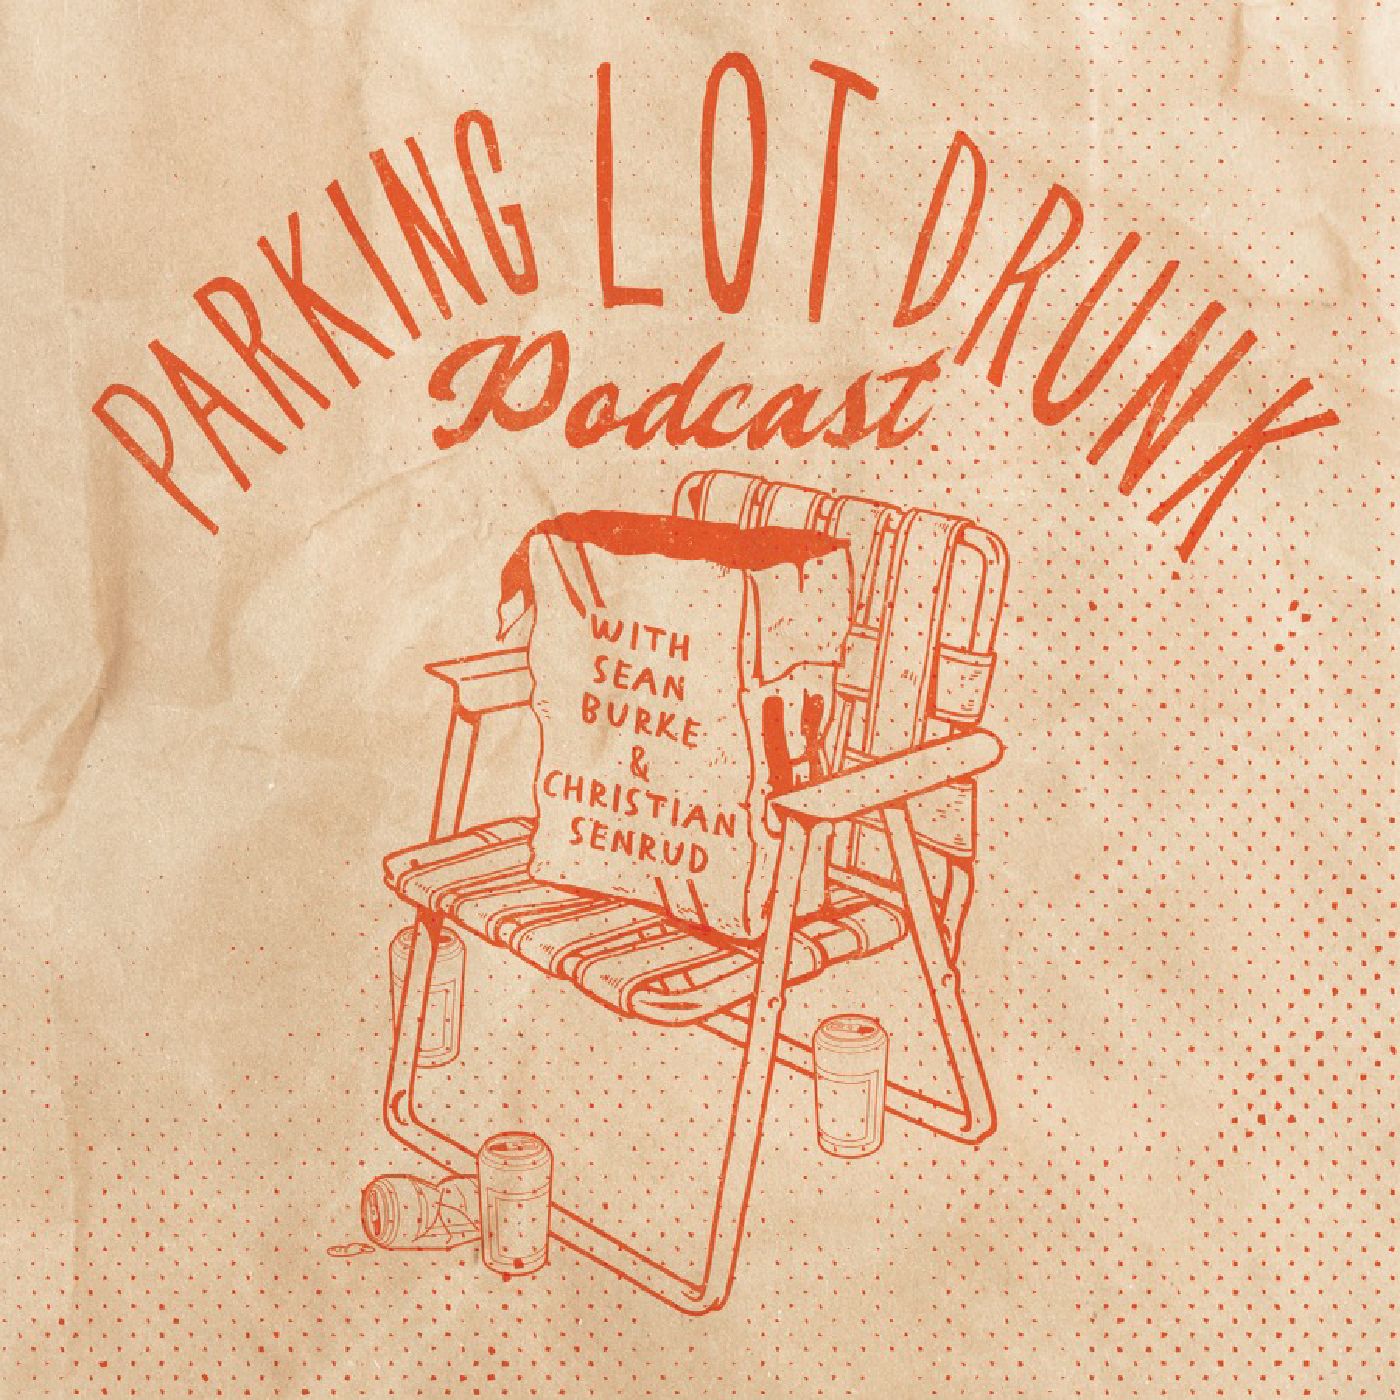 Parking Lot Drunk